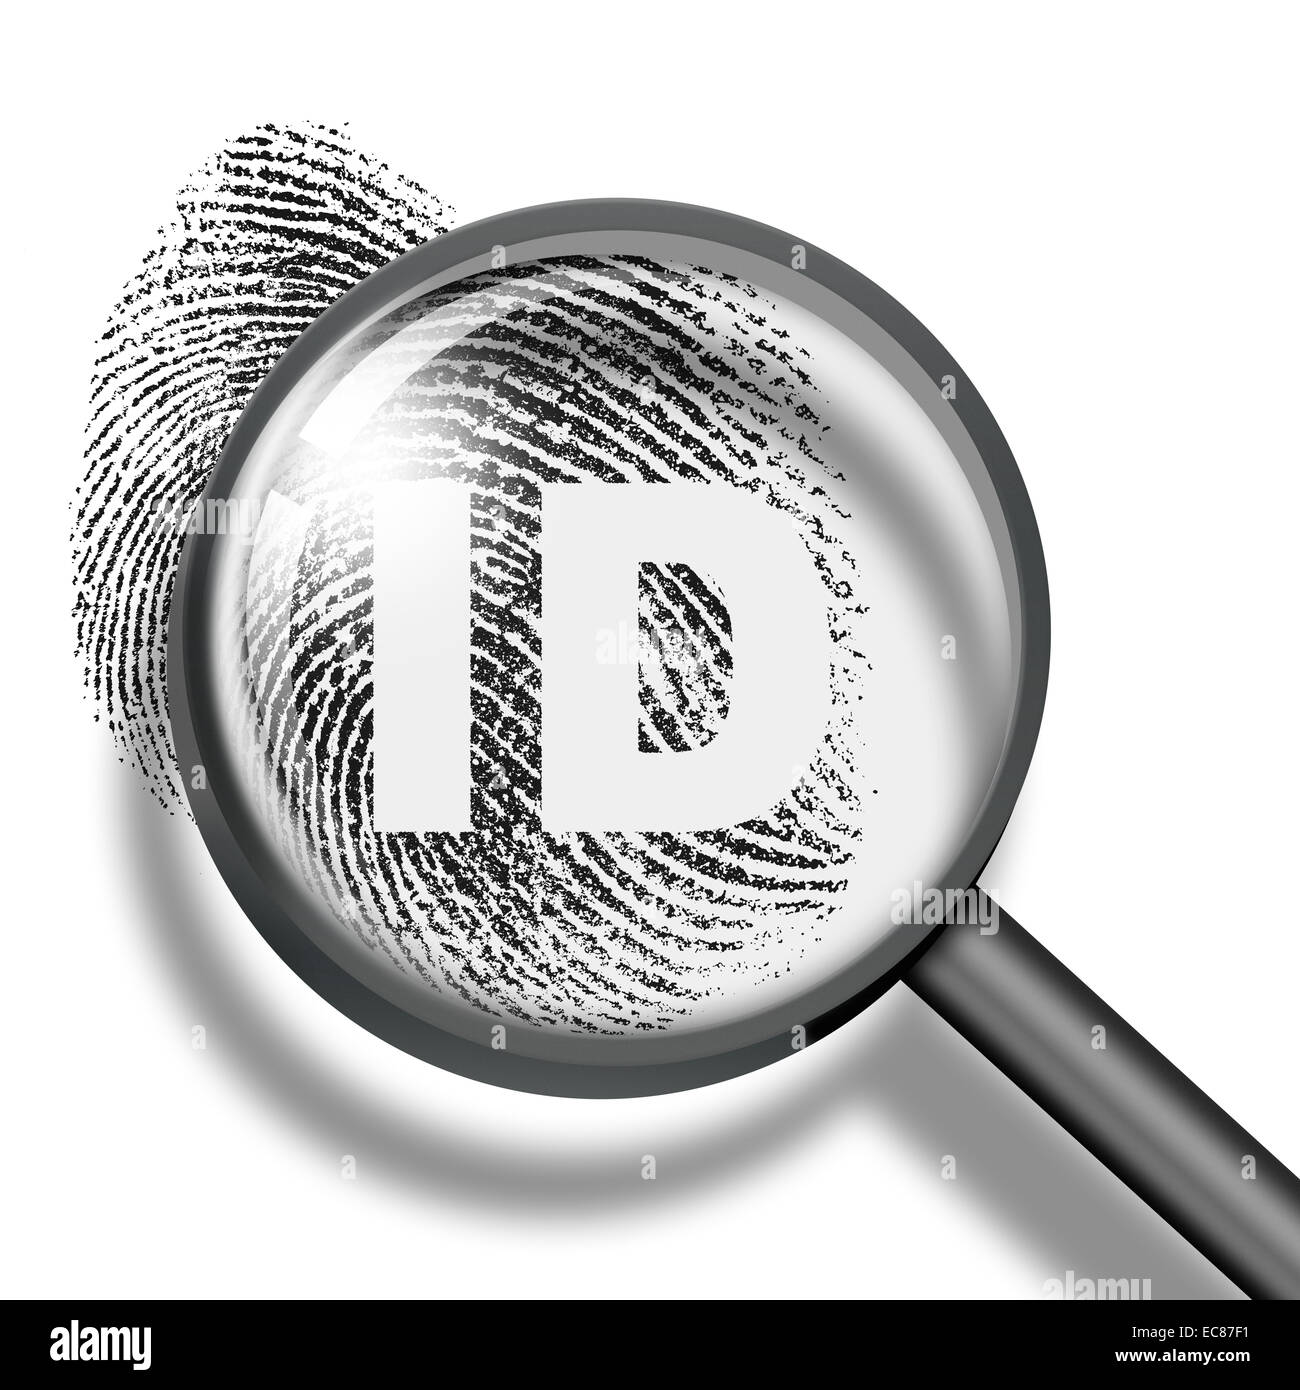 fingerprint identification biometrics concept Stock Photo